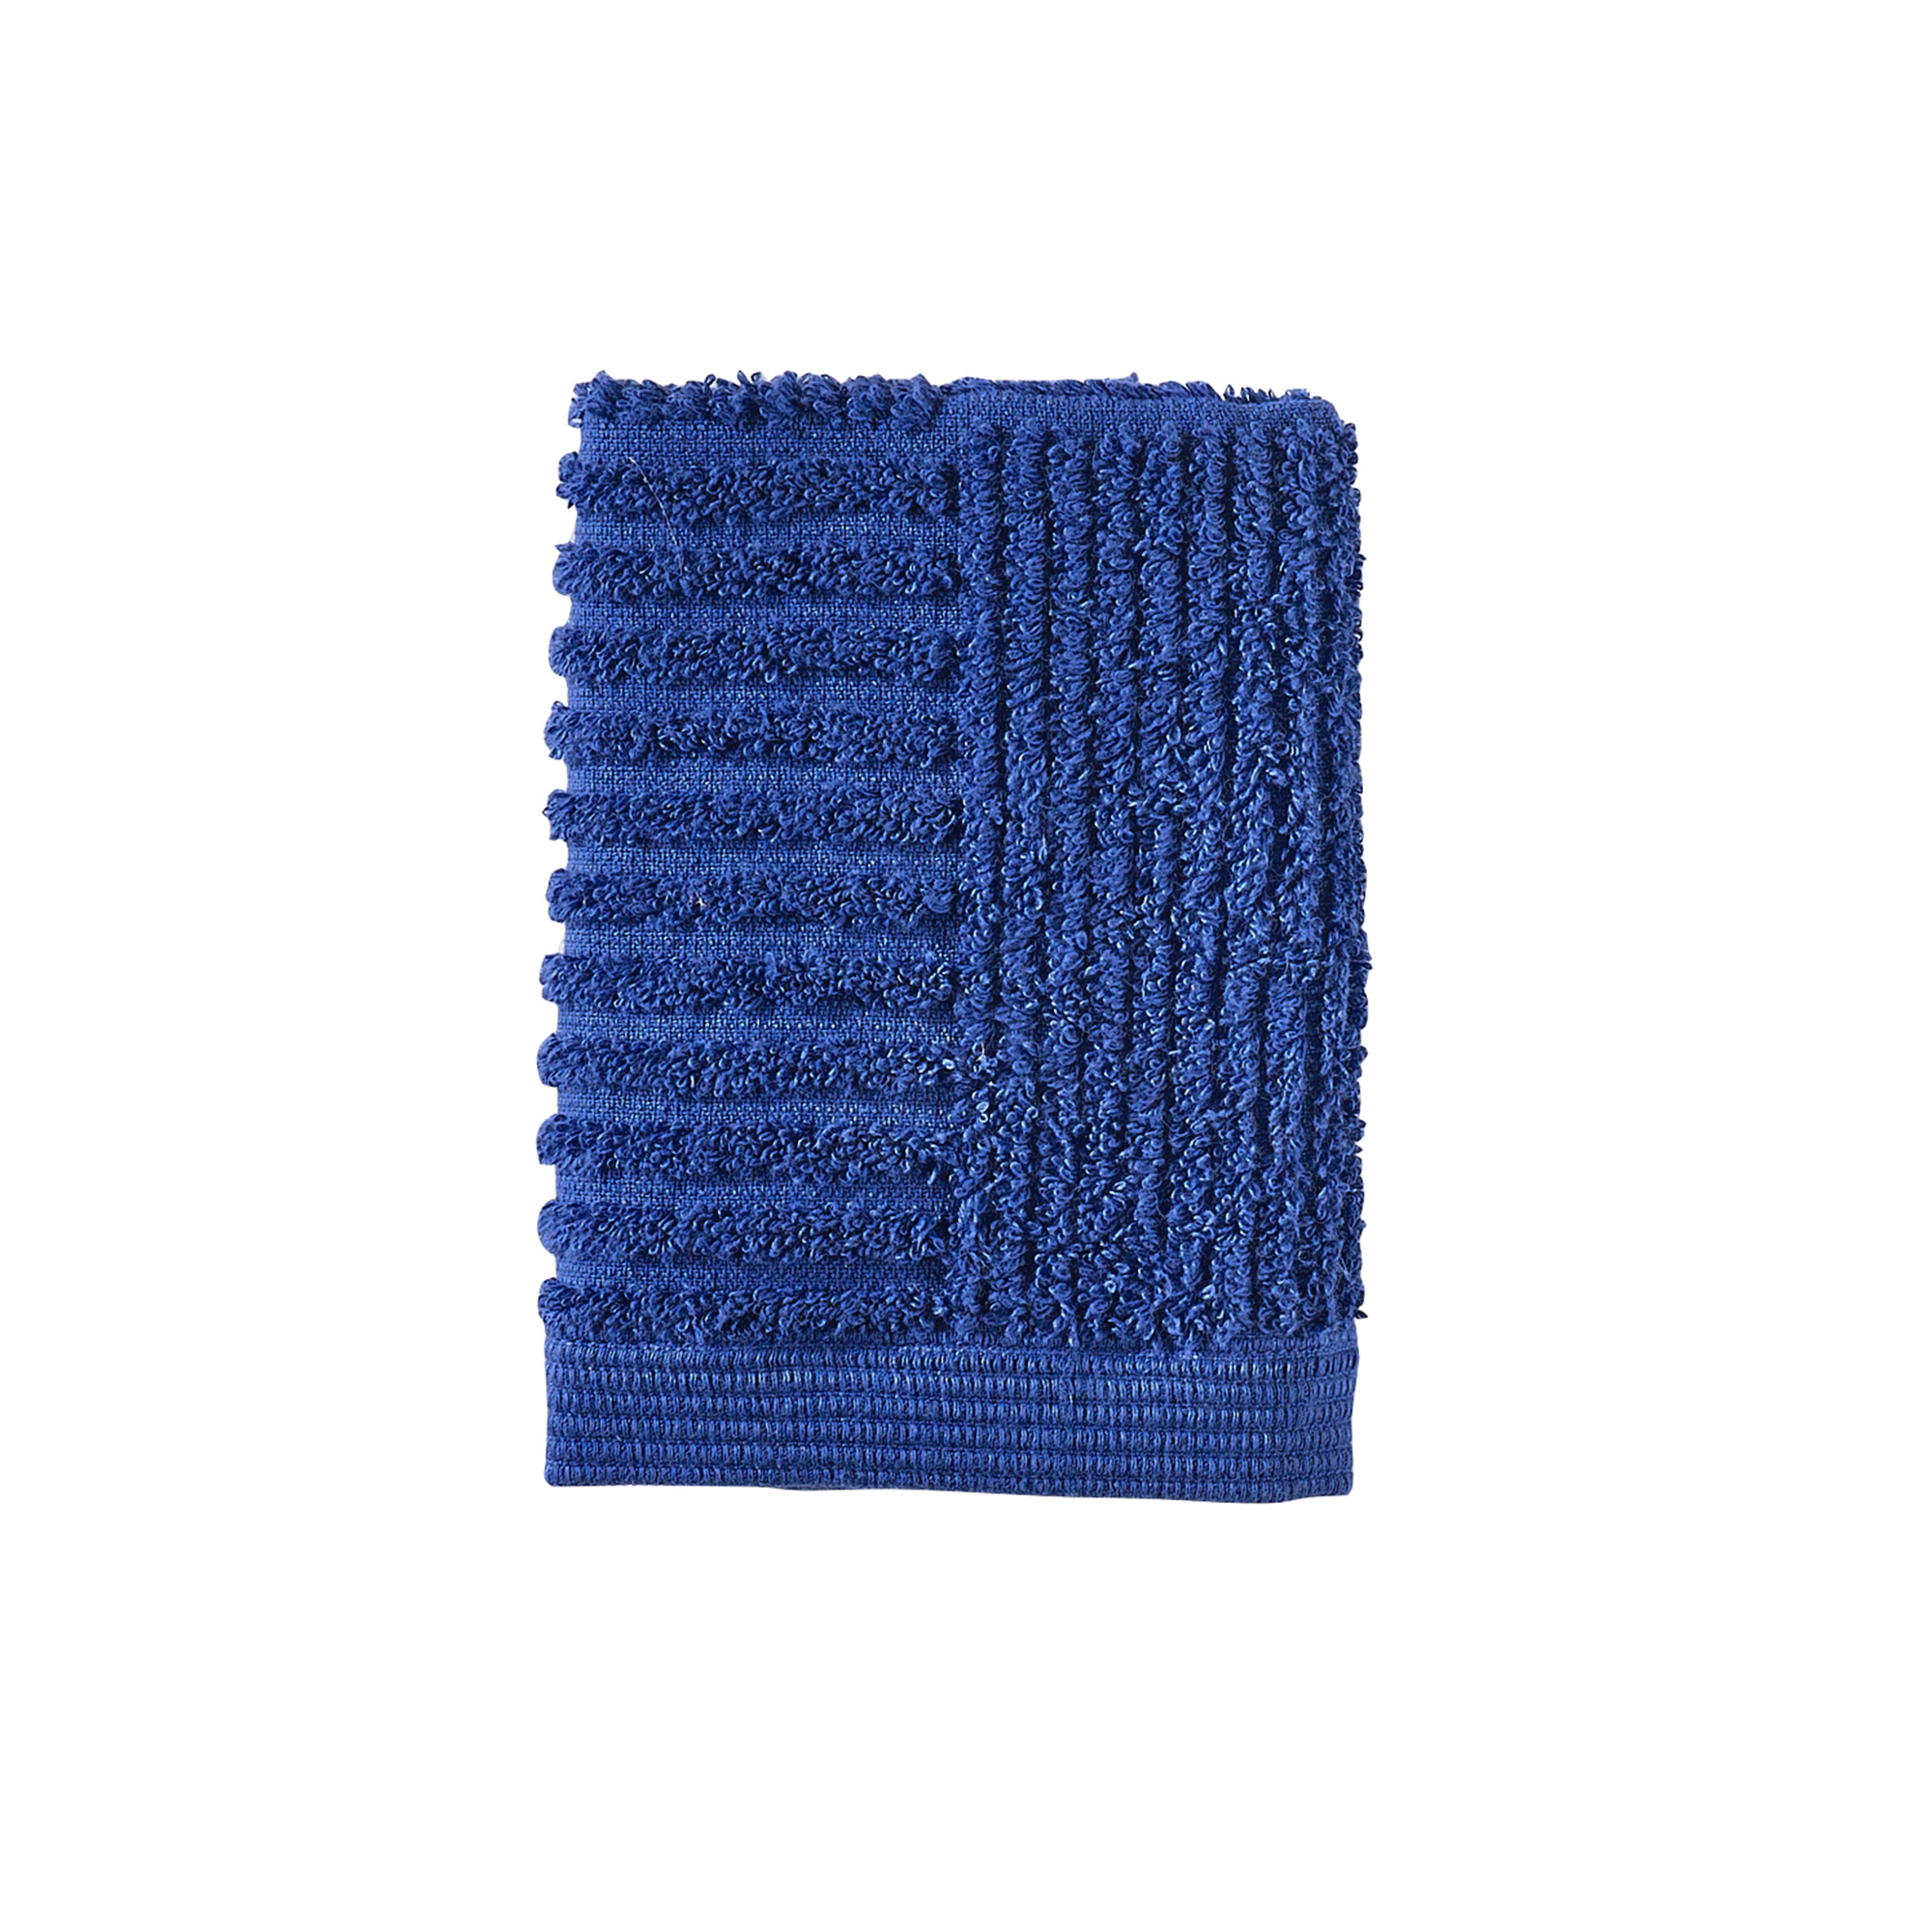 Zone - Classic Flannel - 30 x 30 cm - Indigo Blue